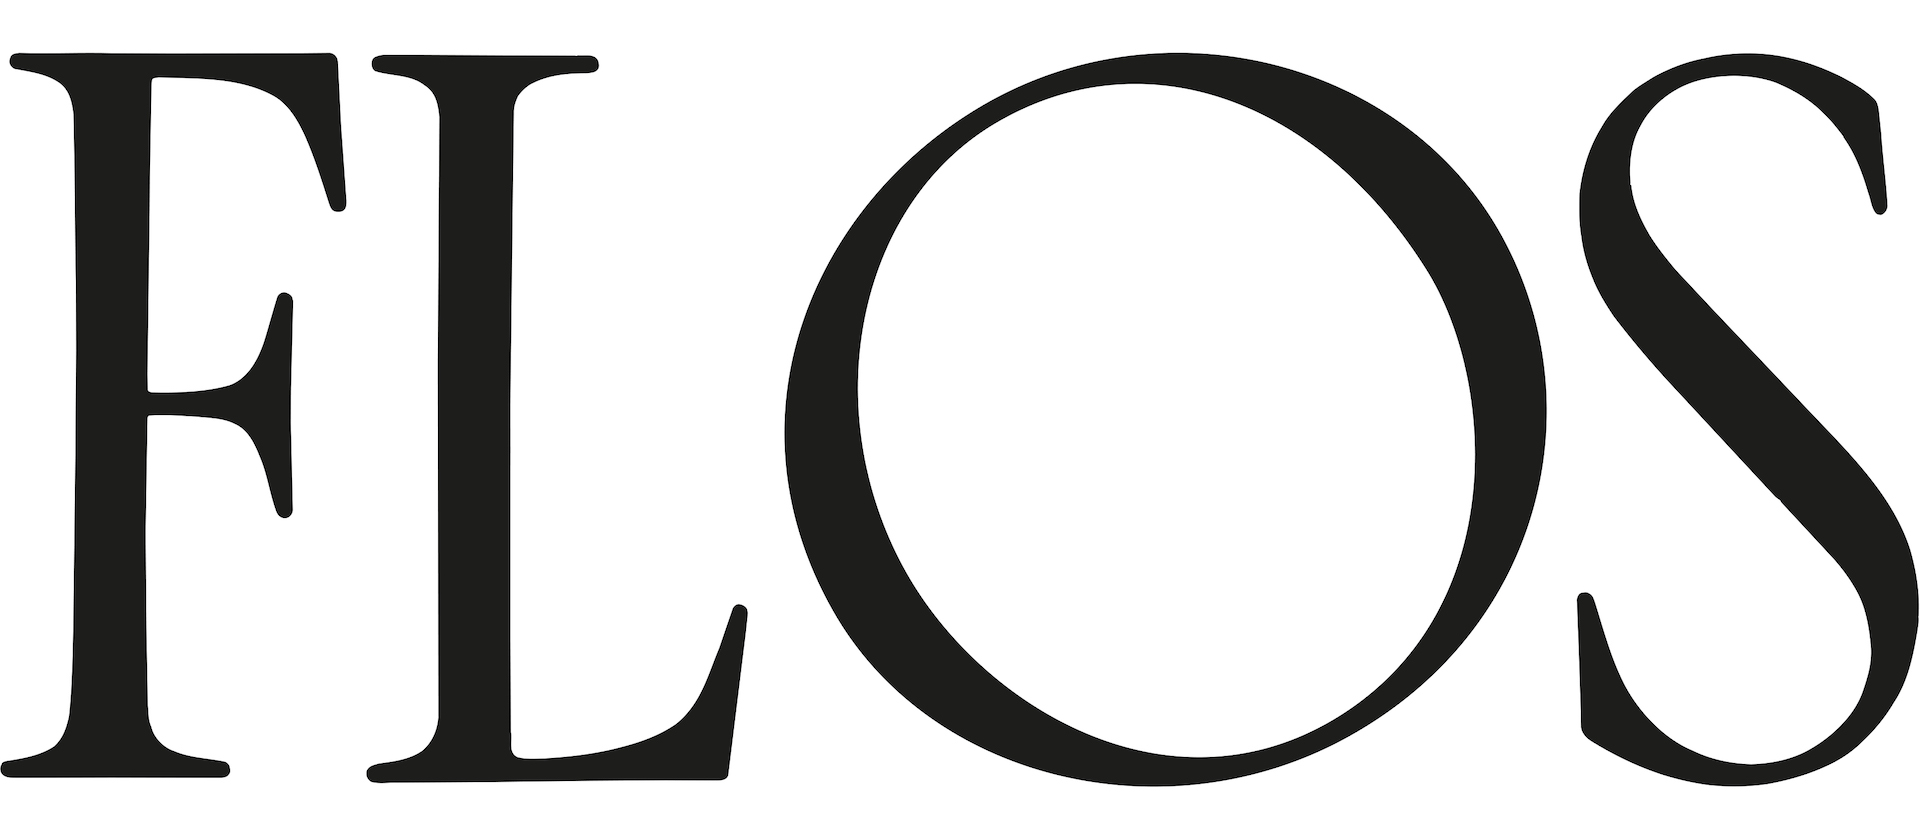 Logo FLOS